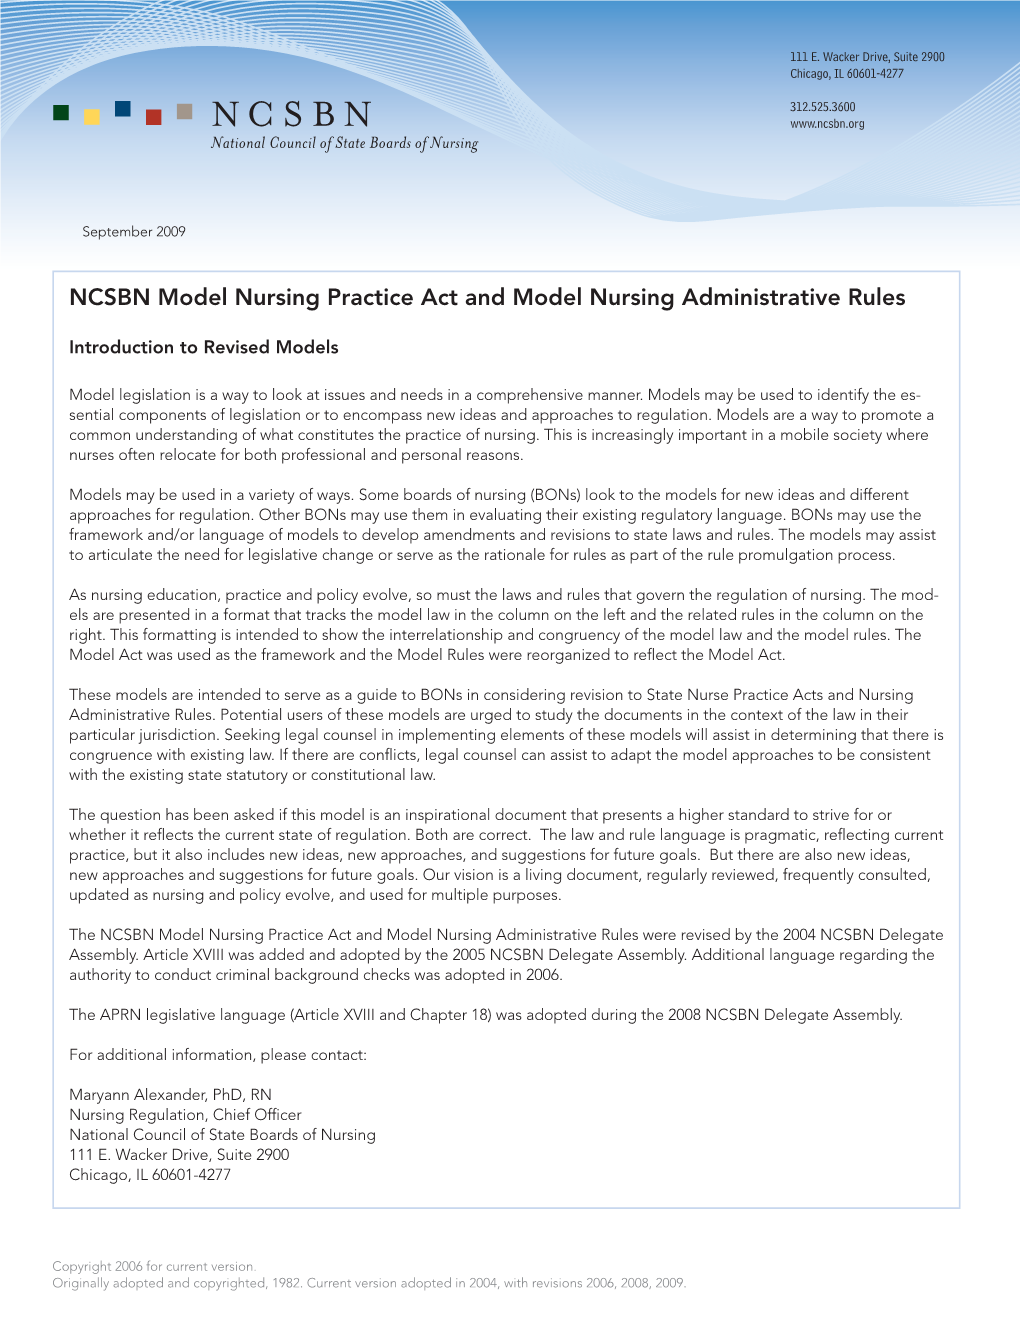 NCSBN Model Nursing Practice Act and Model Nursing Administrative Rules